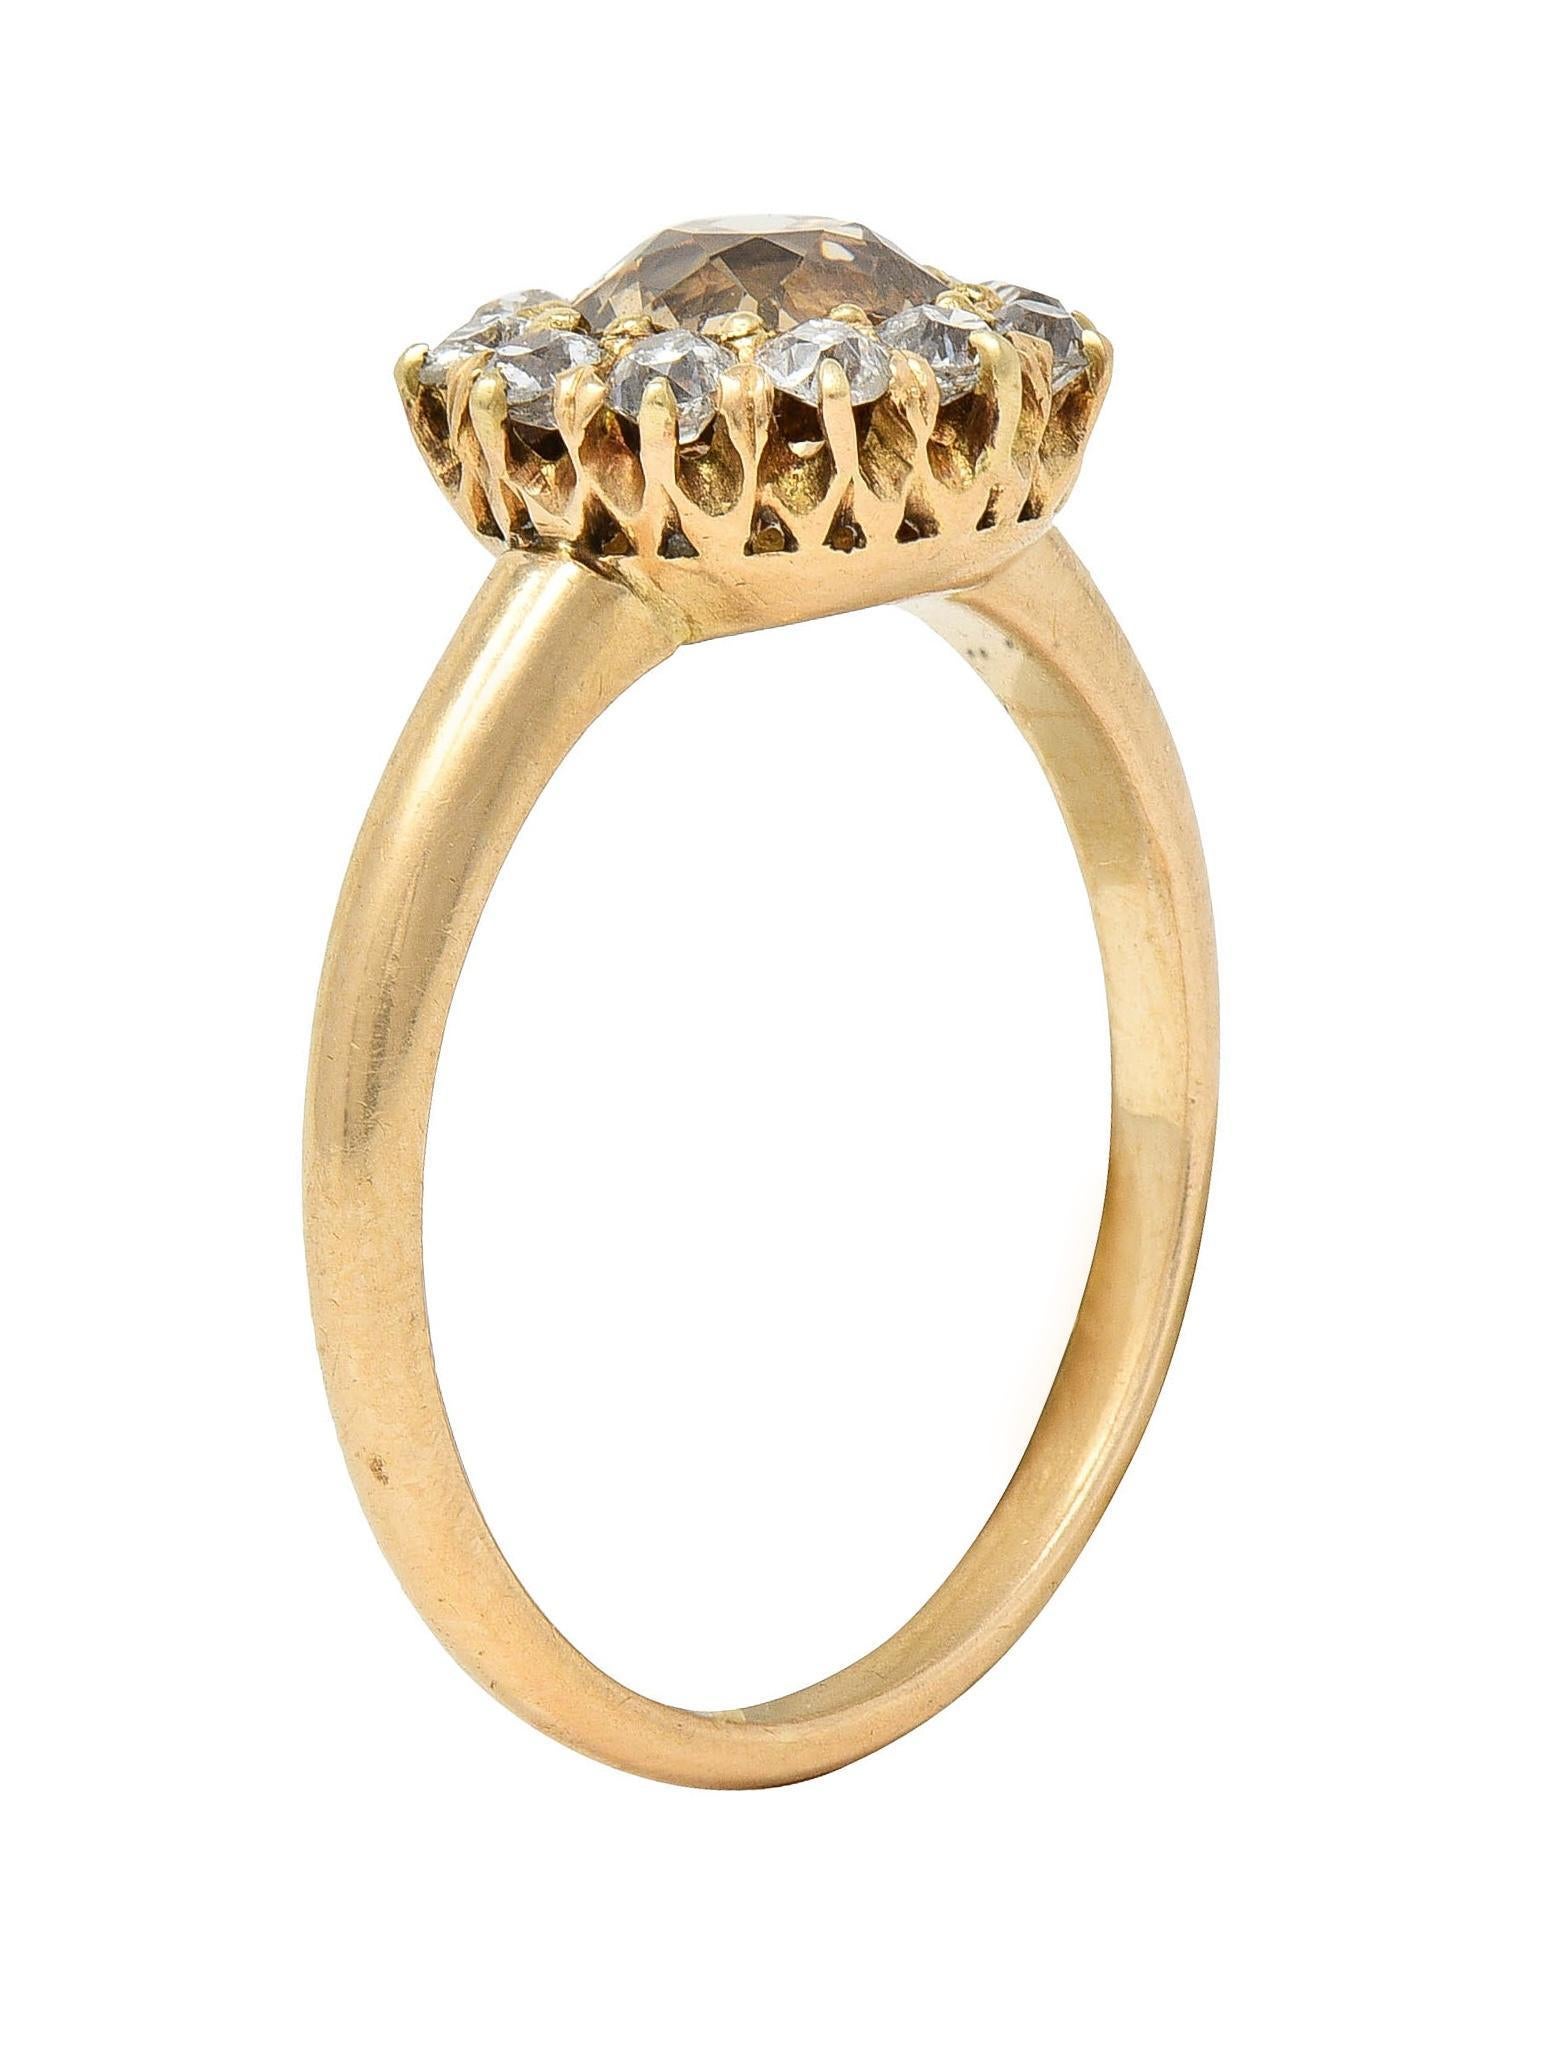 Victorian Old Mine Fancy Brown Diamond 14 Karat Gold Antique Halo Ring 5